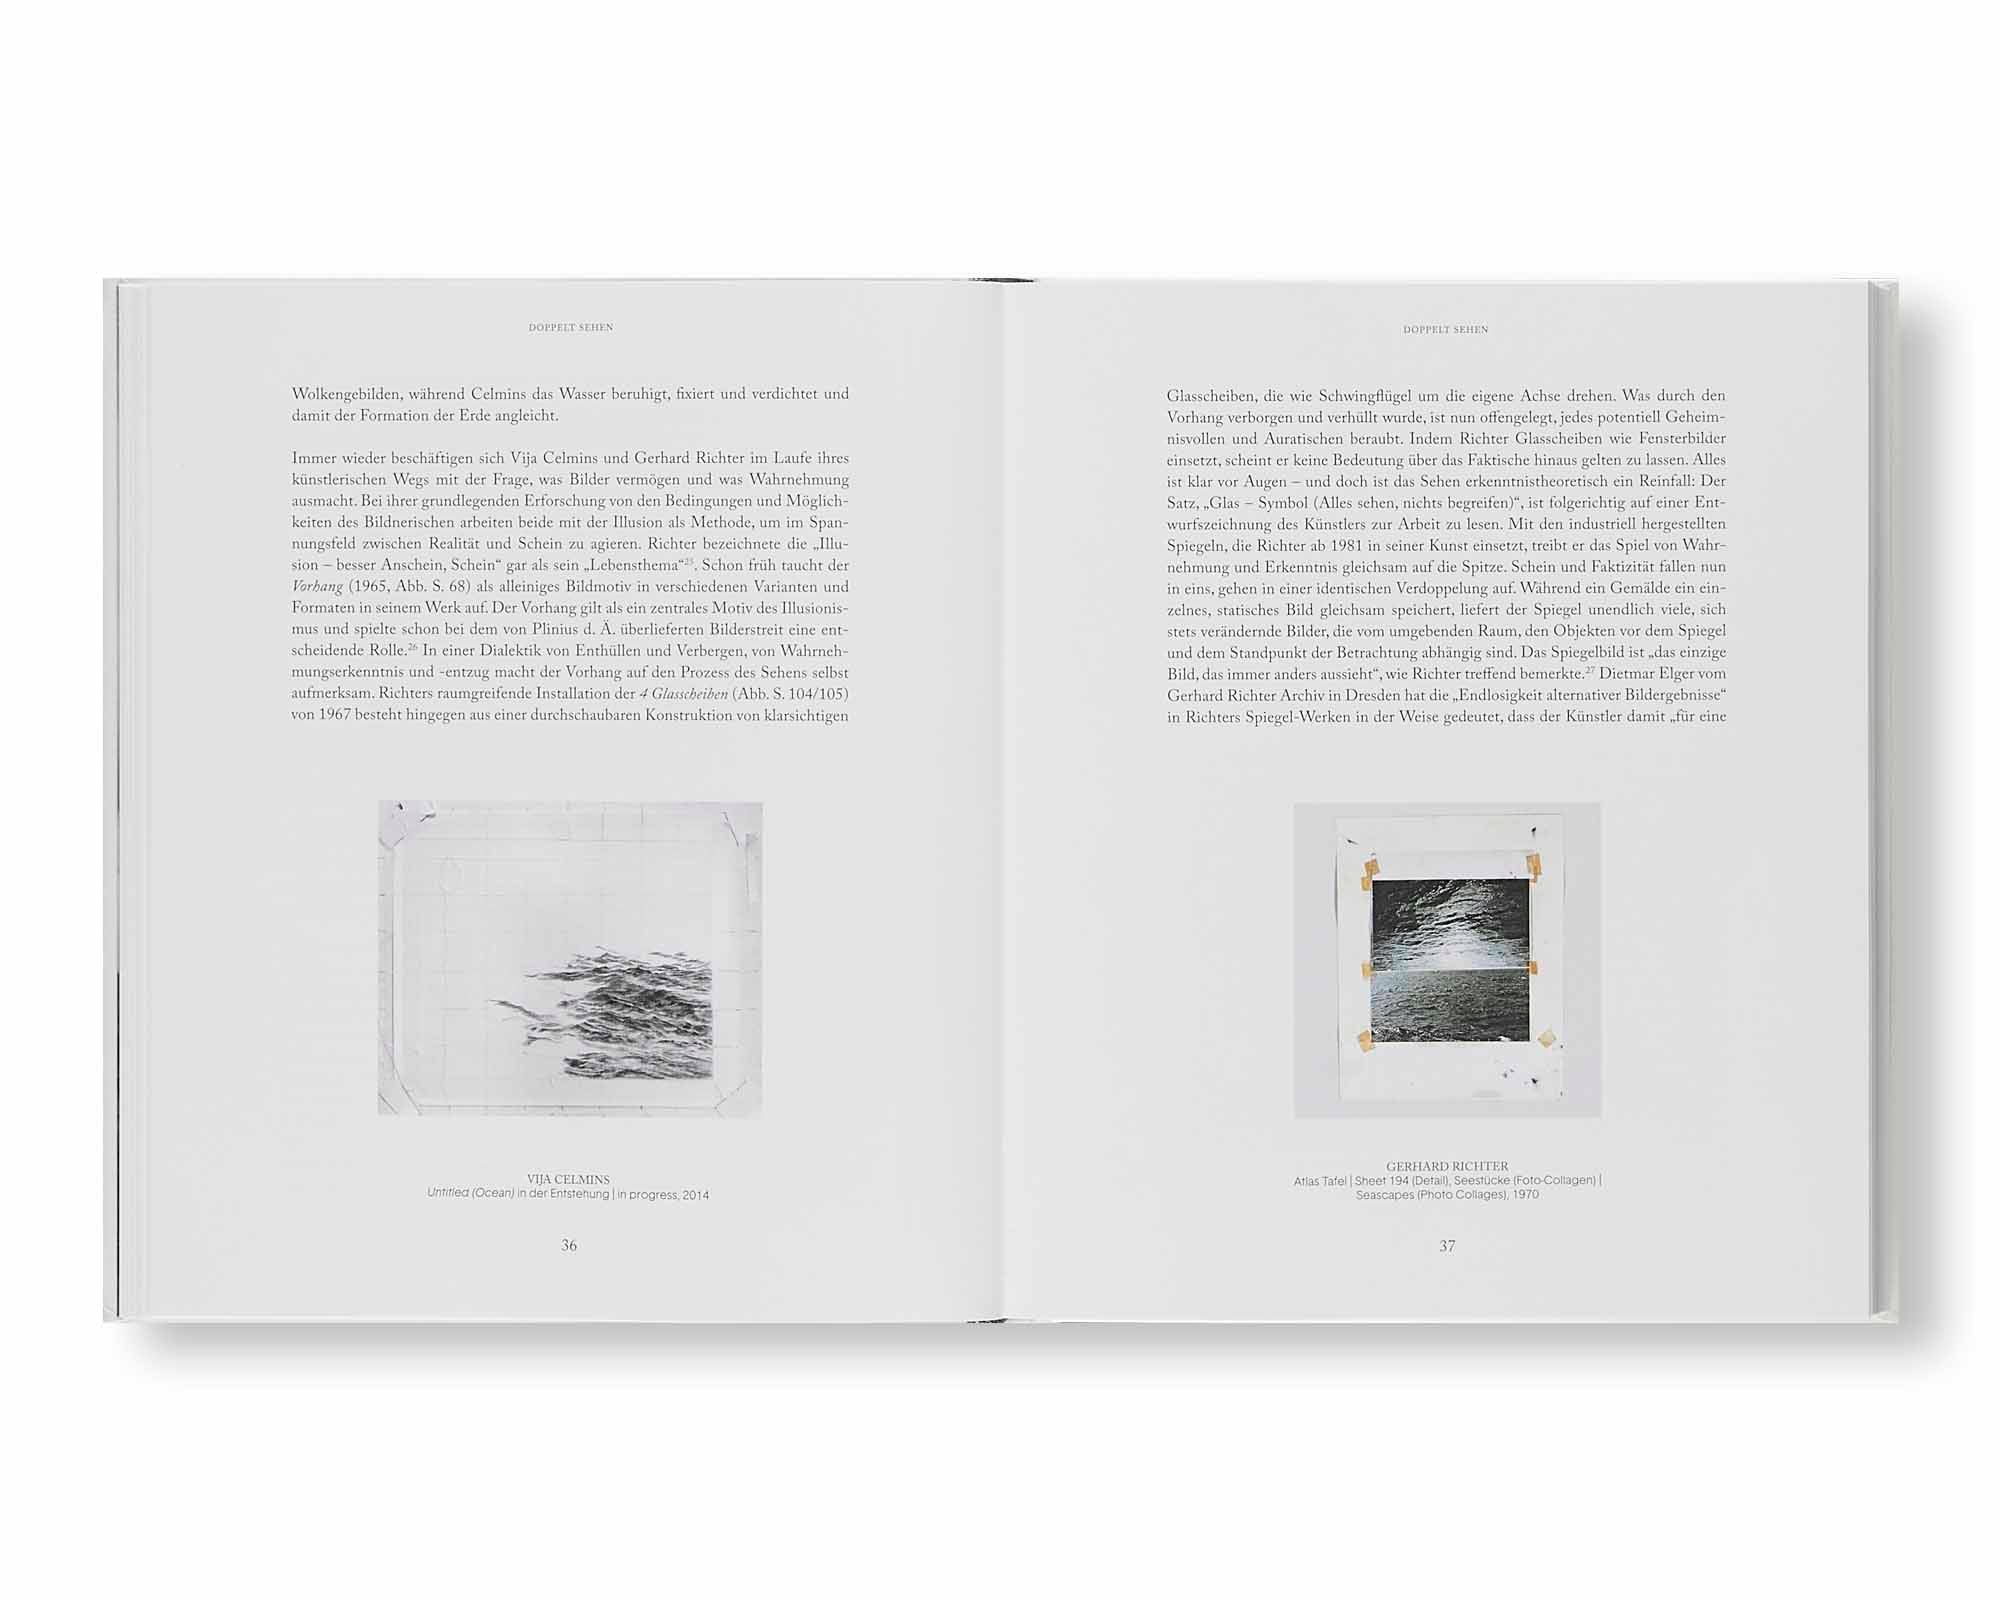 DOUBLE VISION by Vija Celmins, Gerhard Richter – twelvebooks